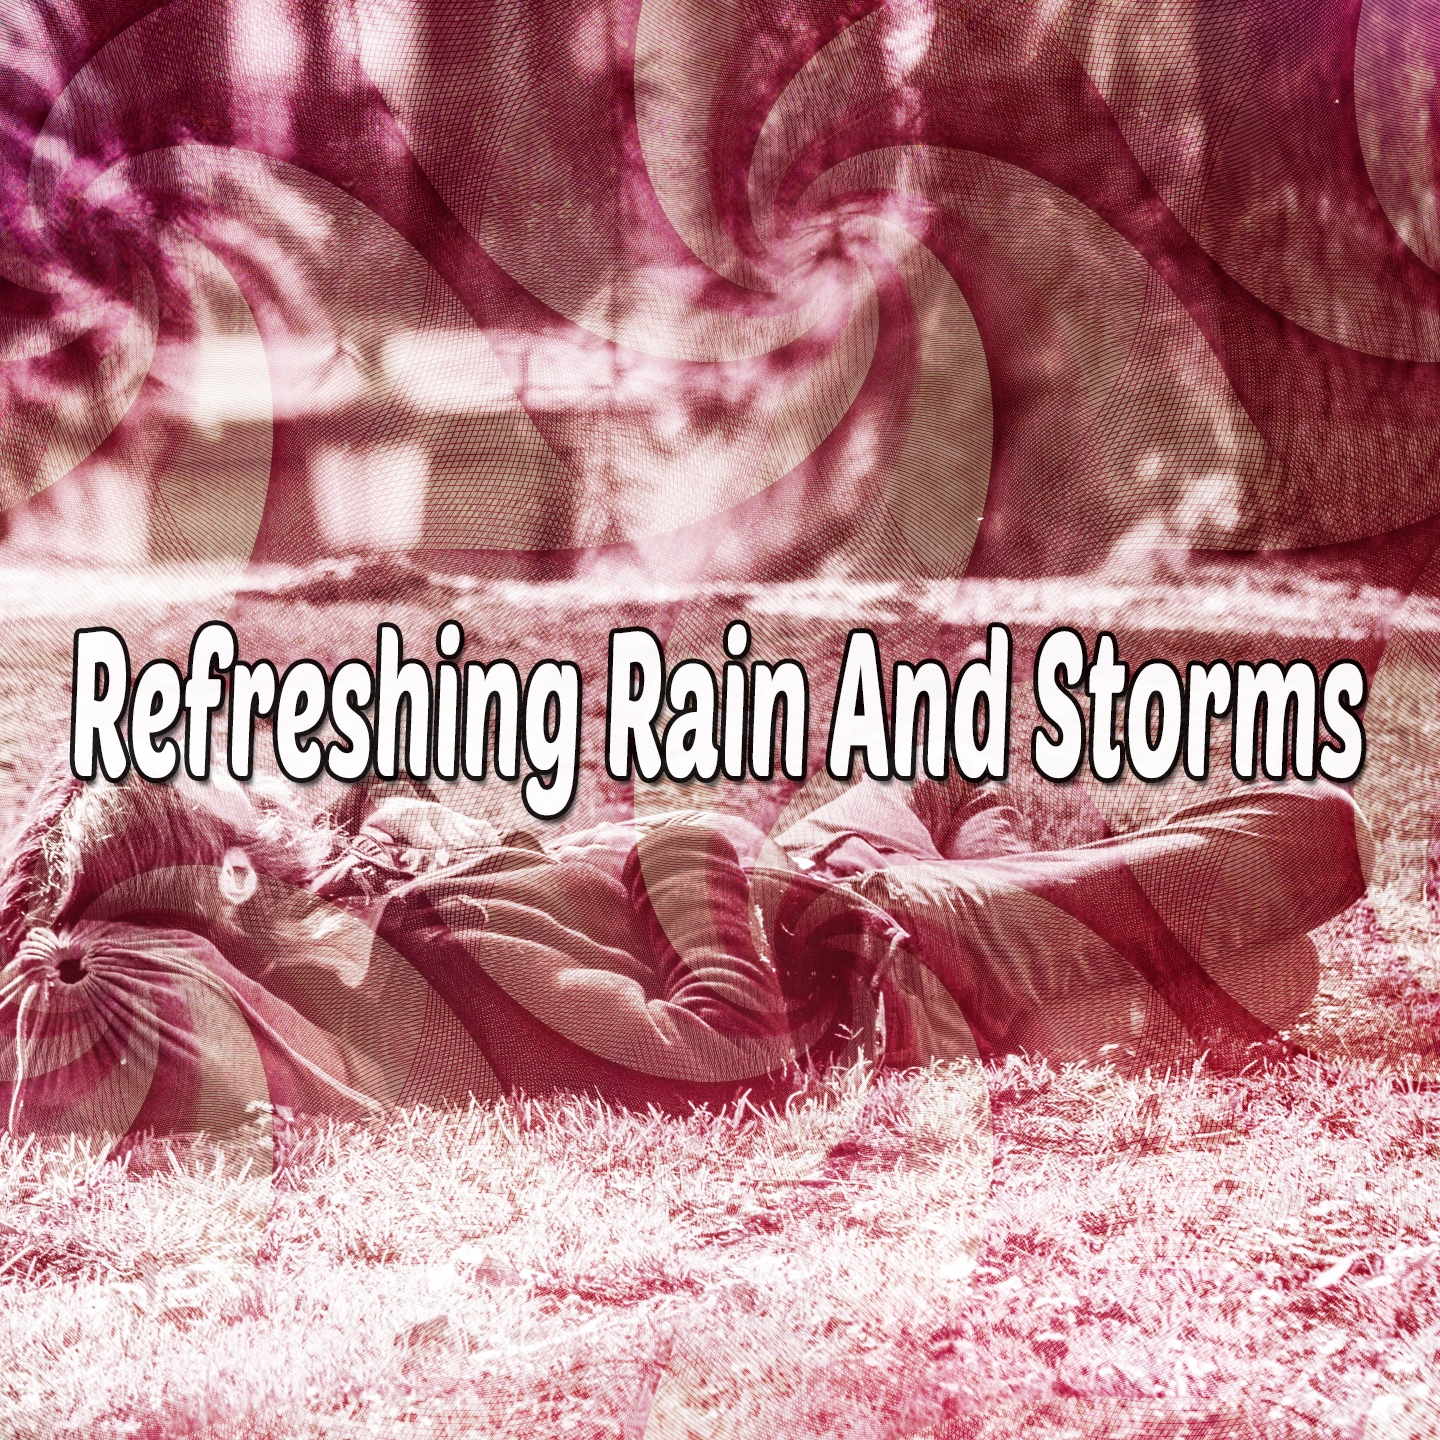 Refreshing Rain And Storms